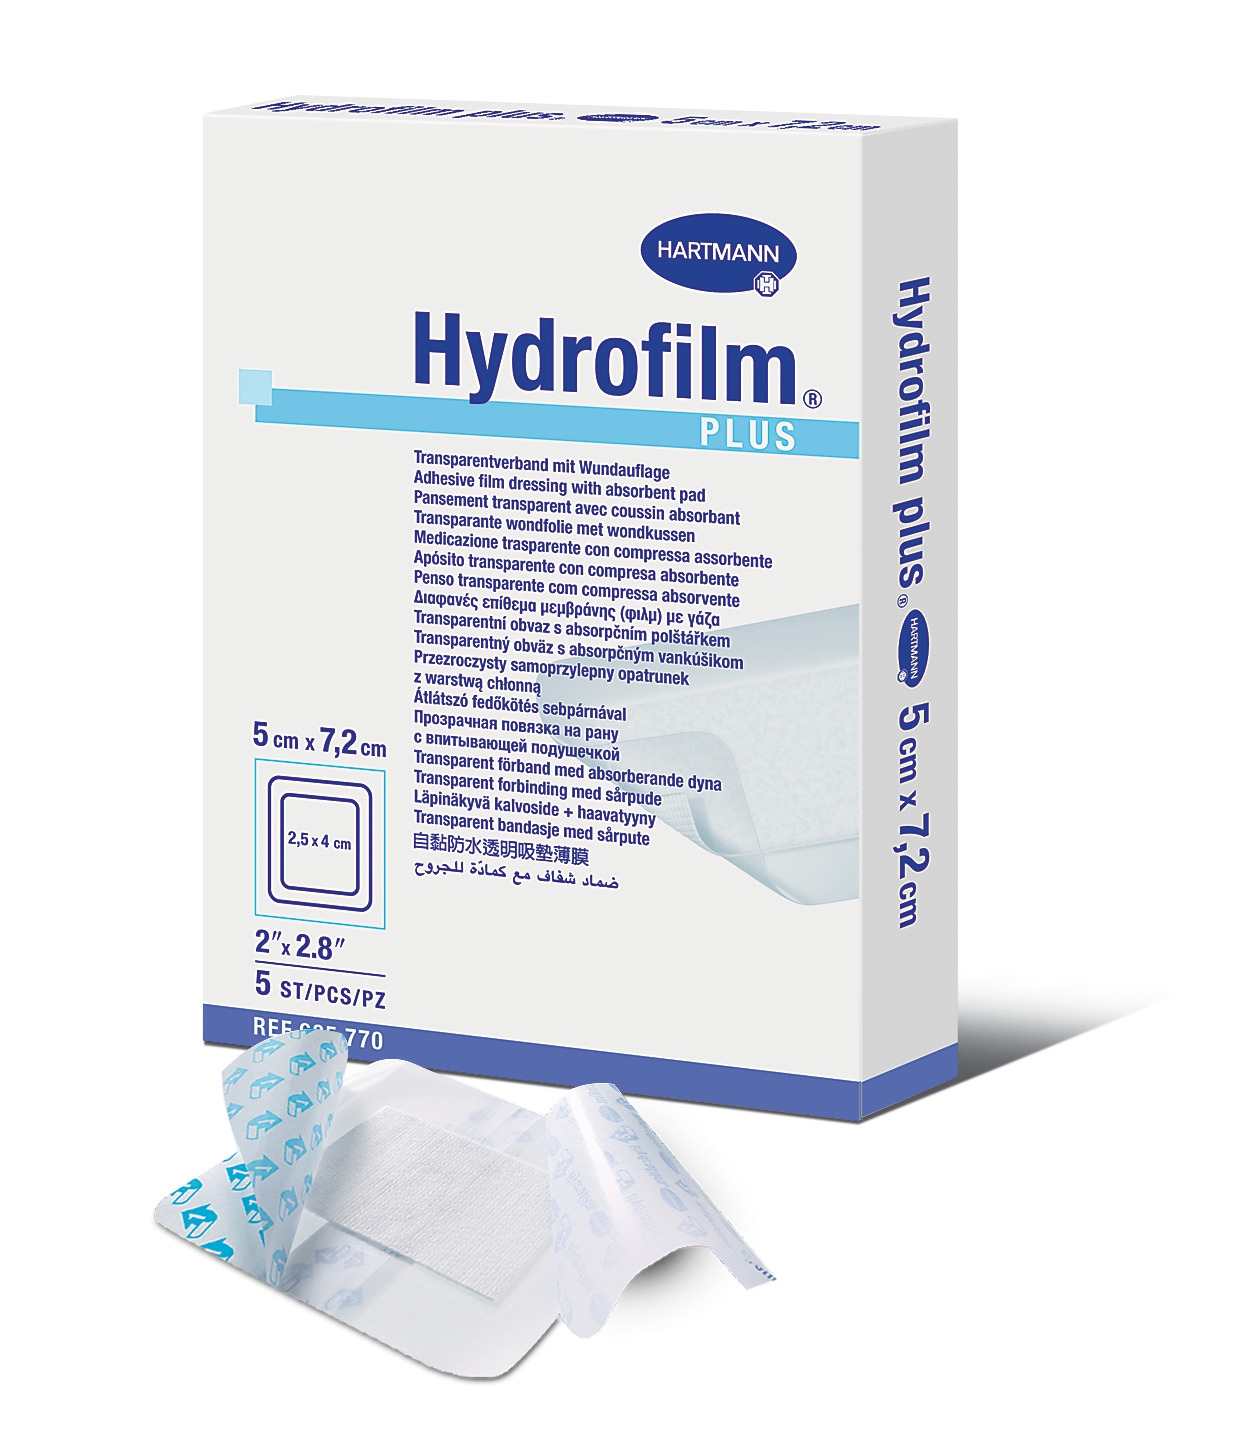 Hydrofilm PLUS Transparentverband 5 x 7,2 cm, 5 Stück